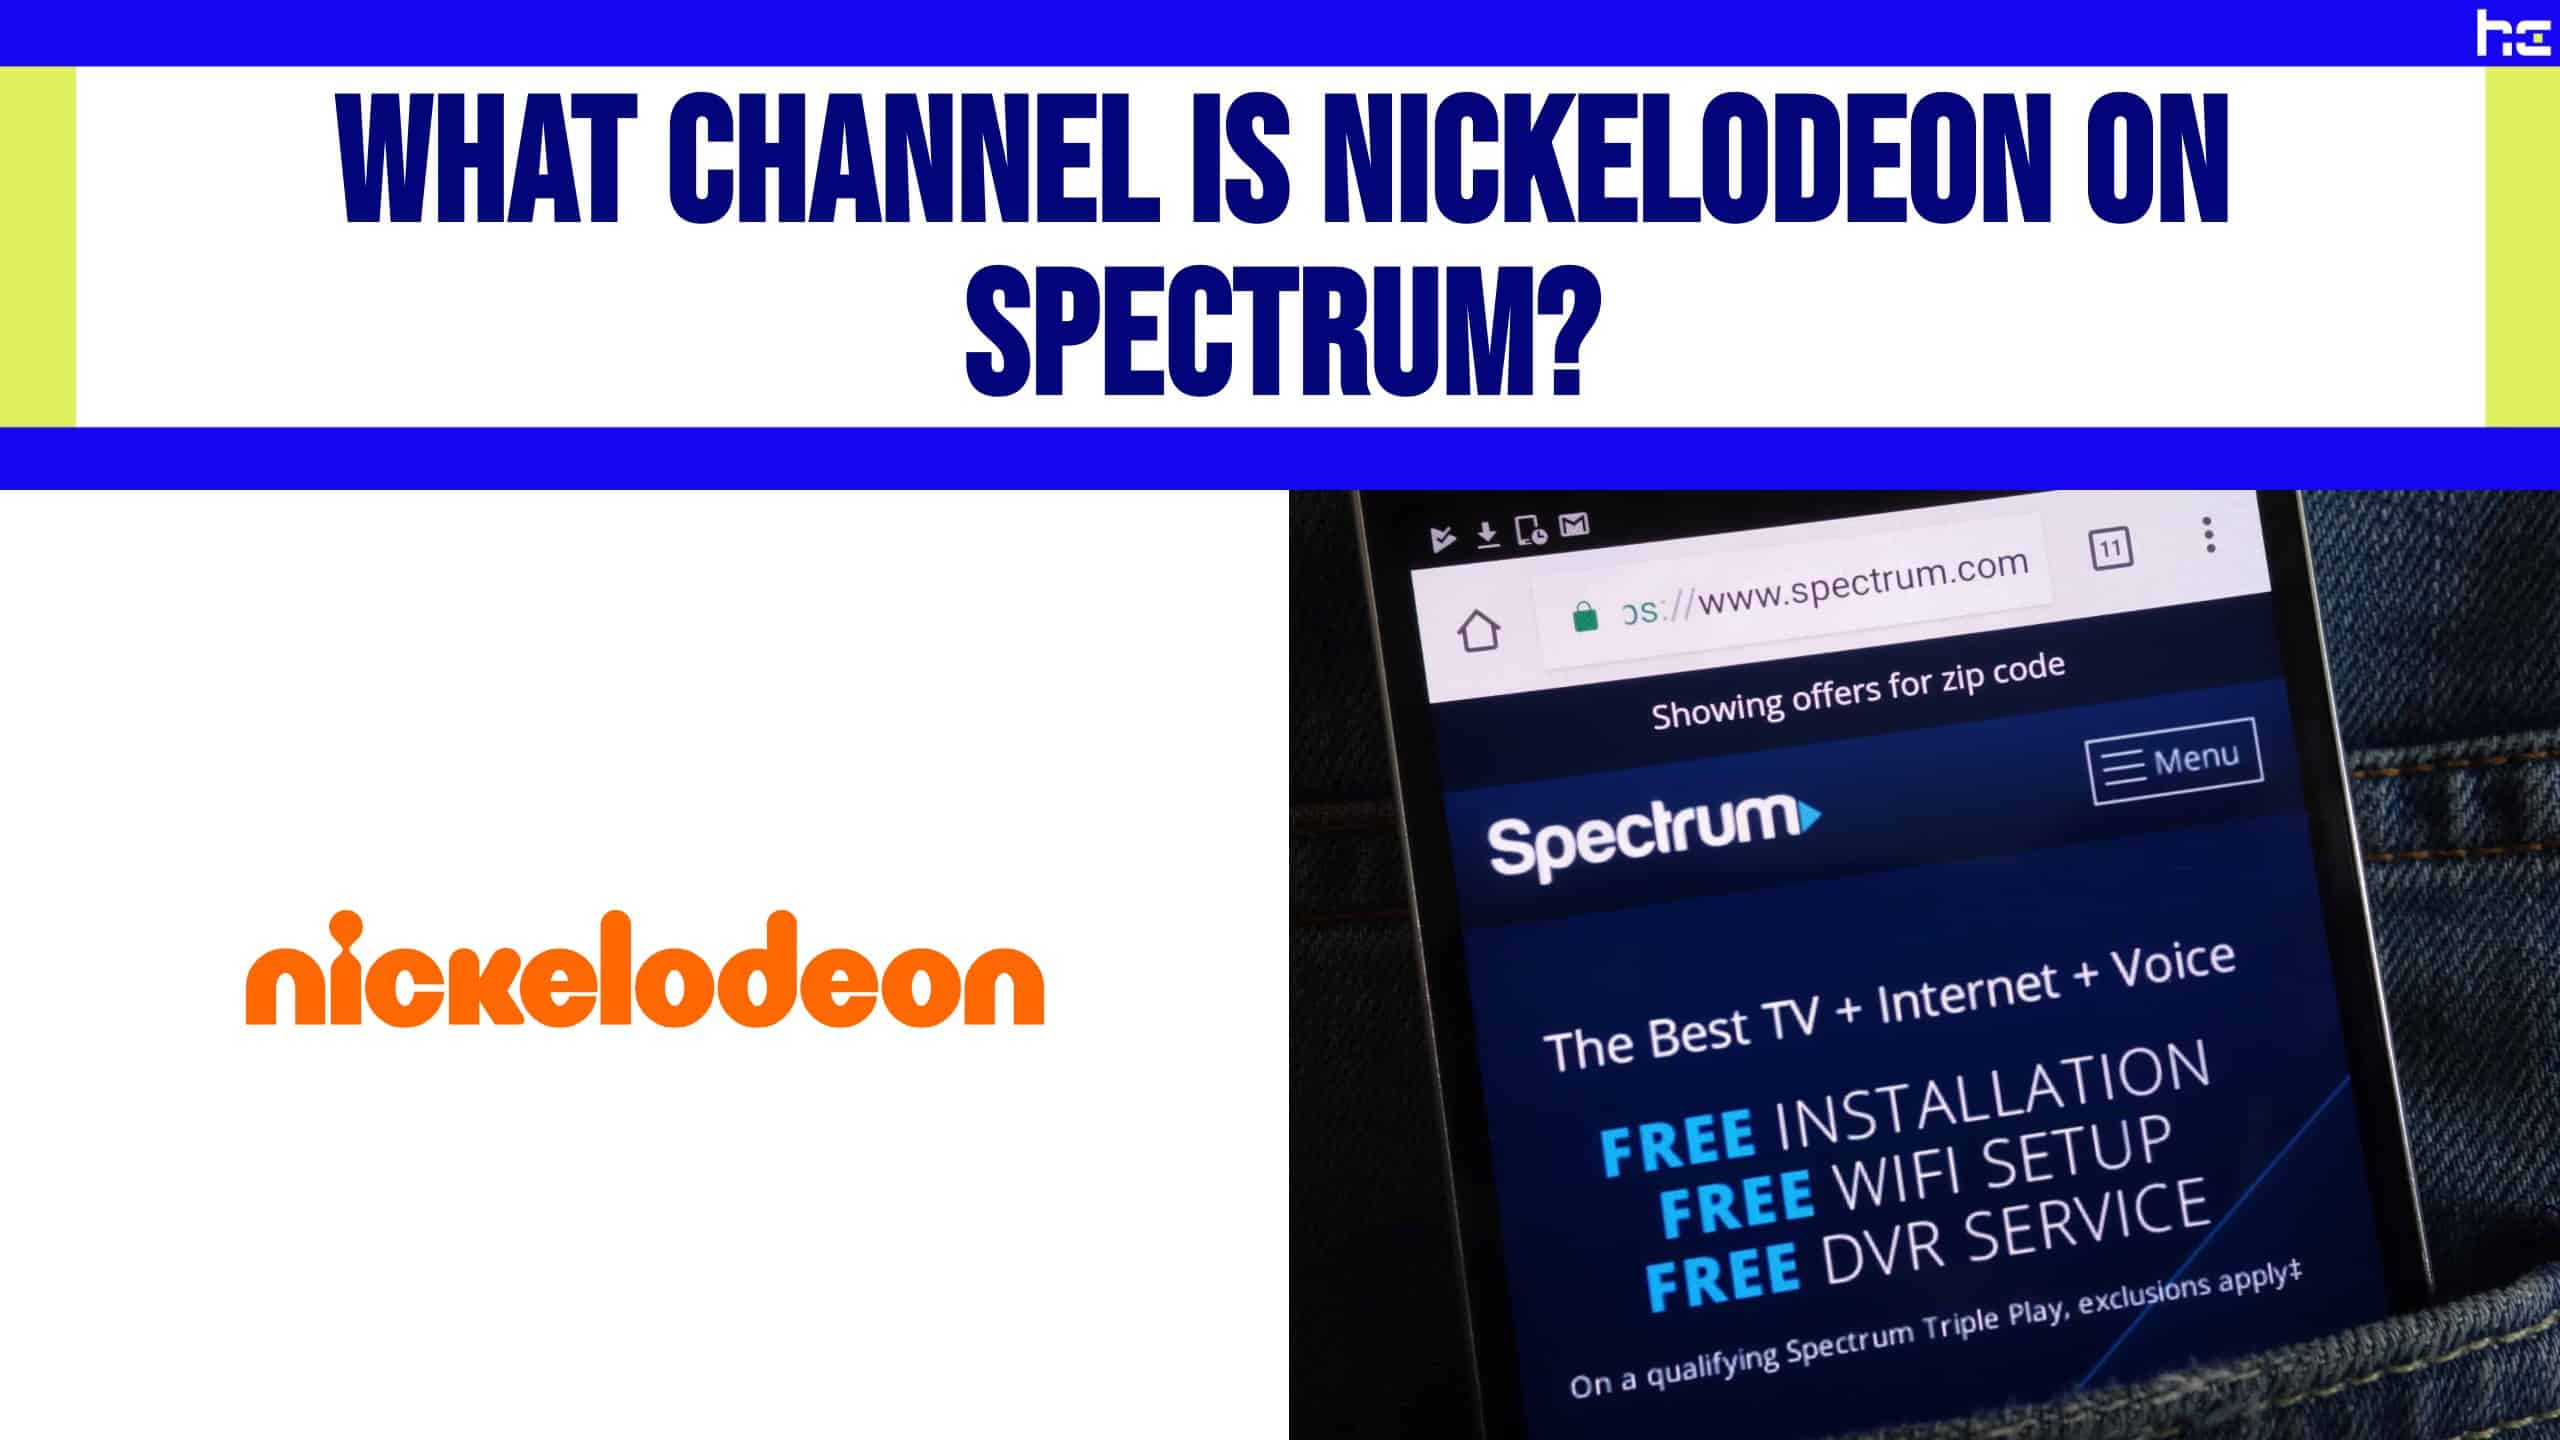 Nickelodeon logo next to Spectrum logo.